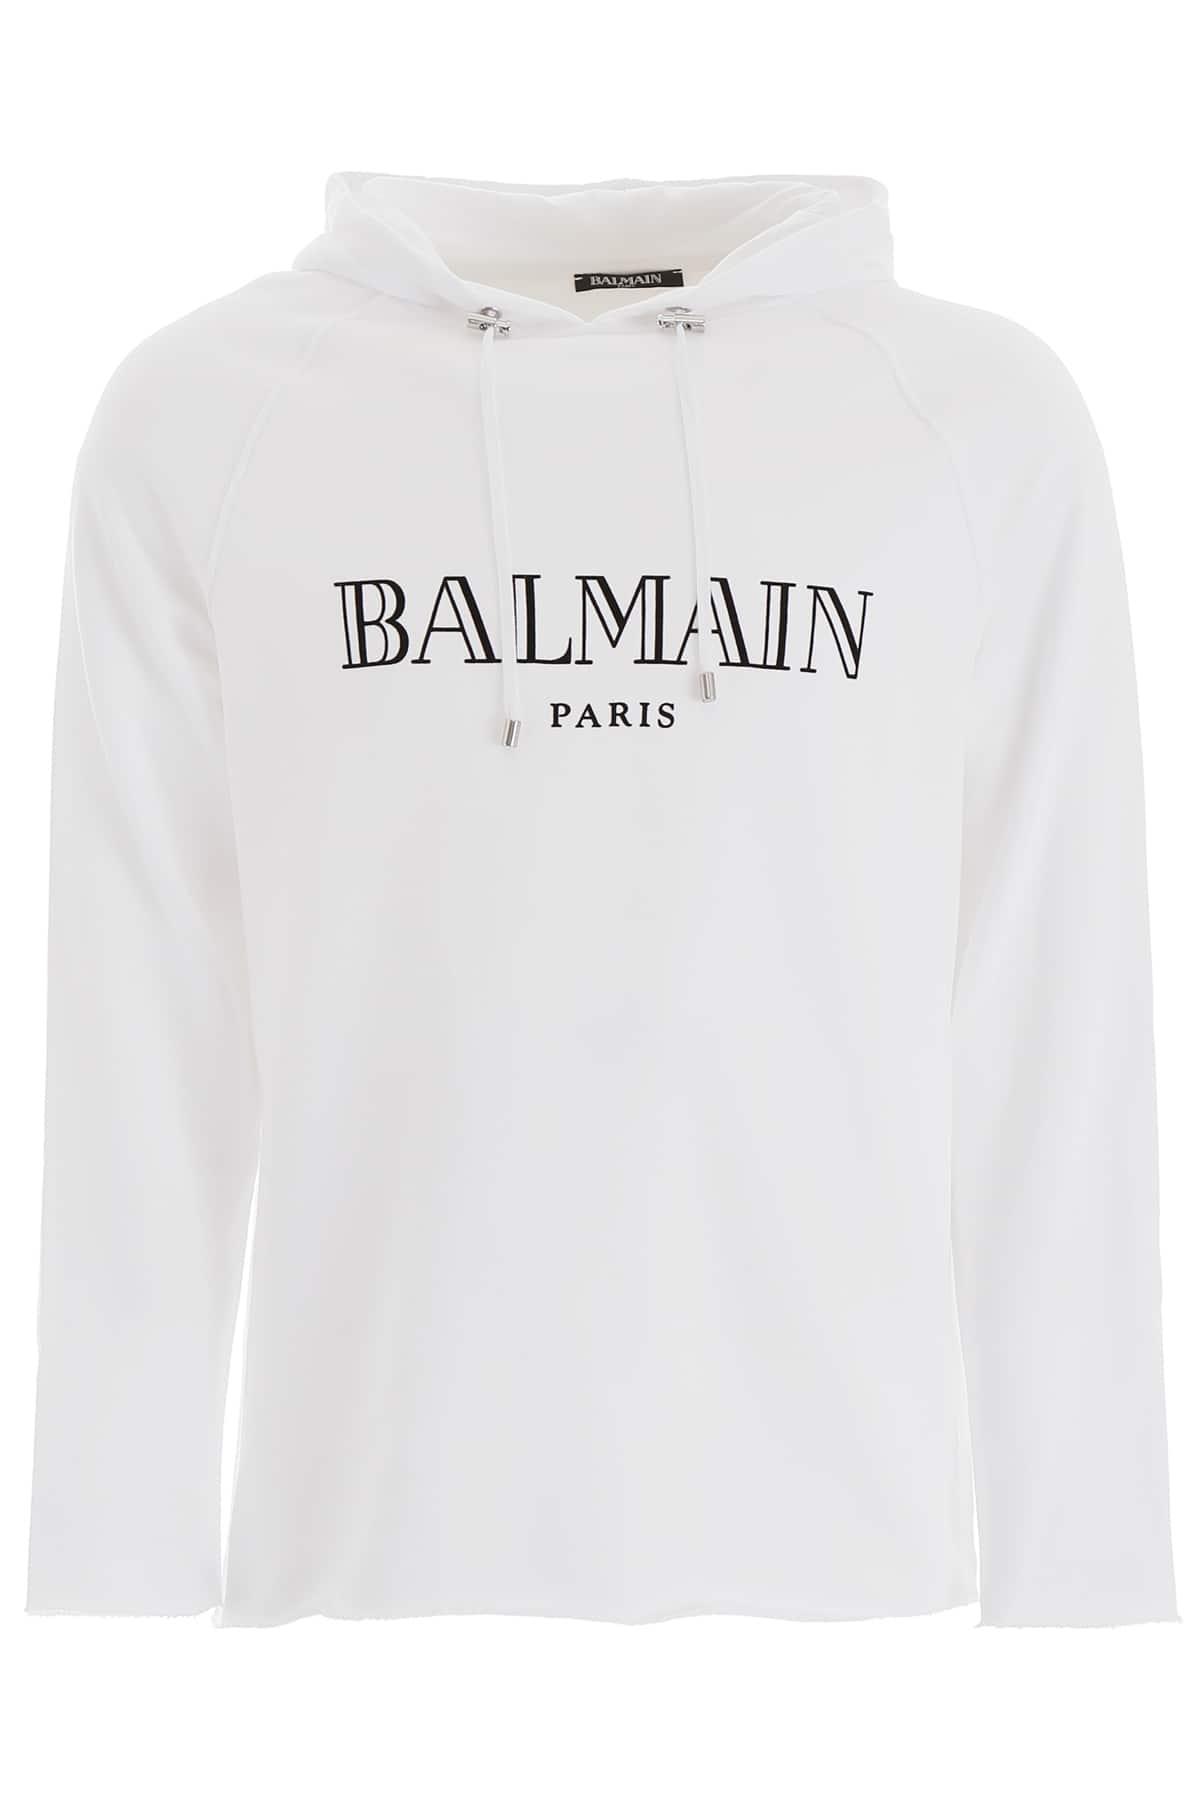 Balmain Logo Hoodie in White for Men - Lyst